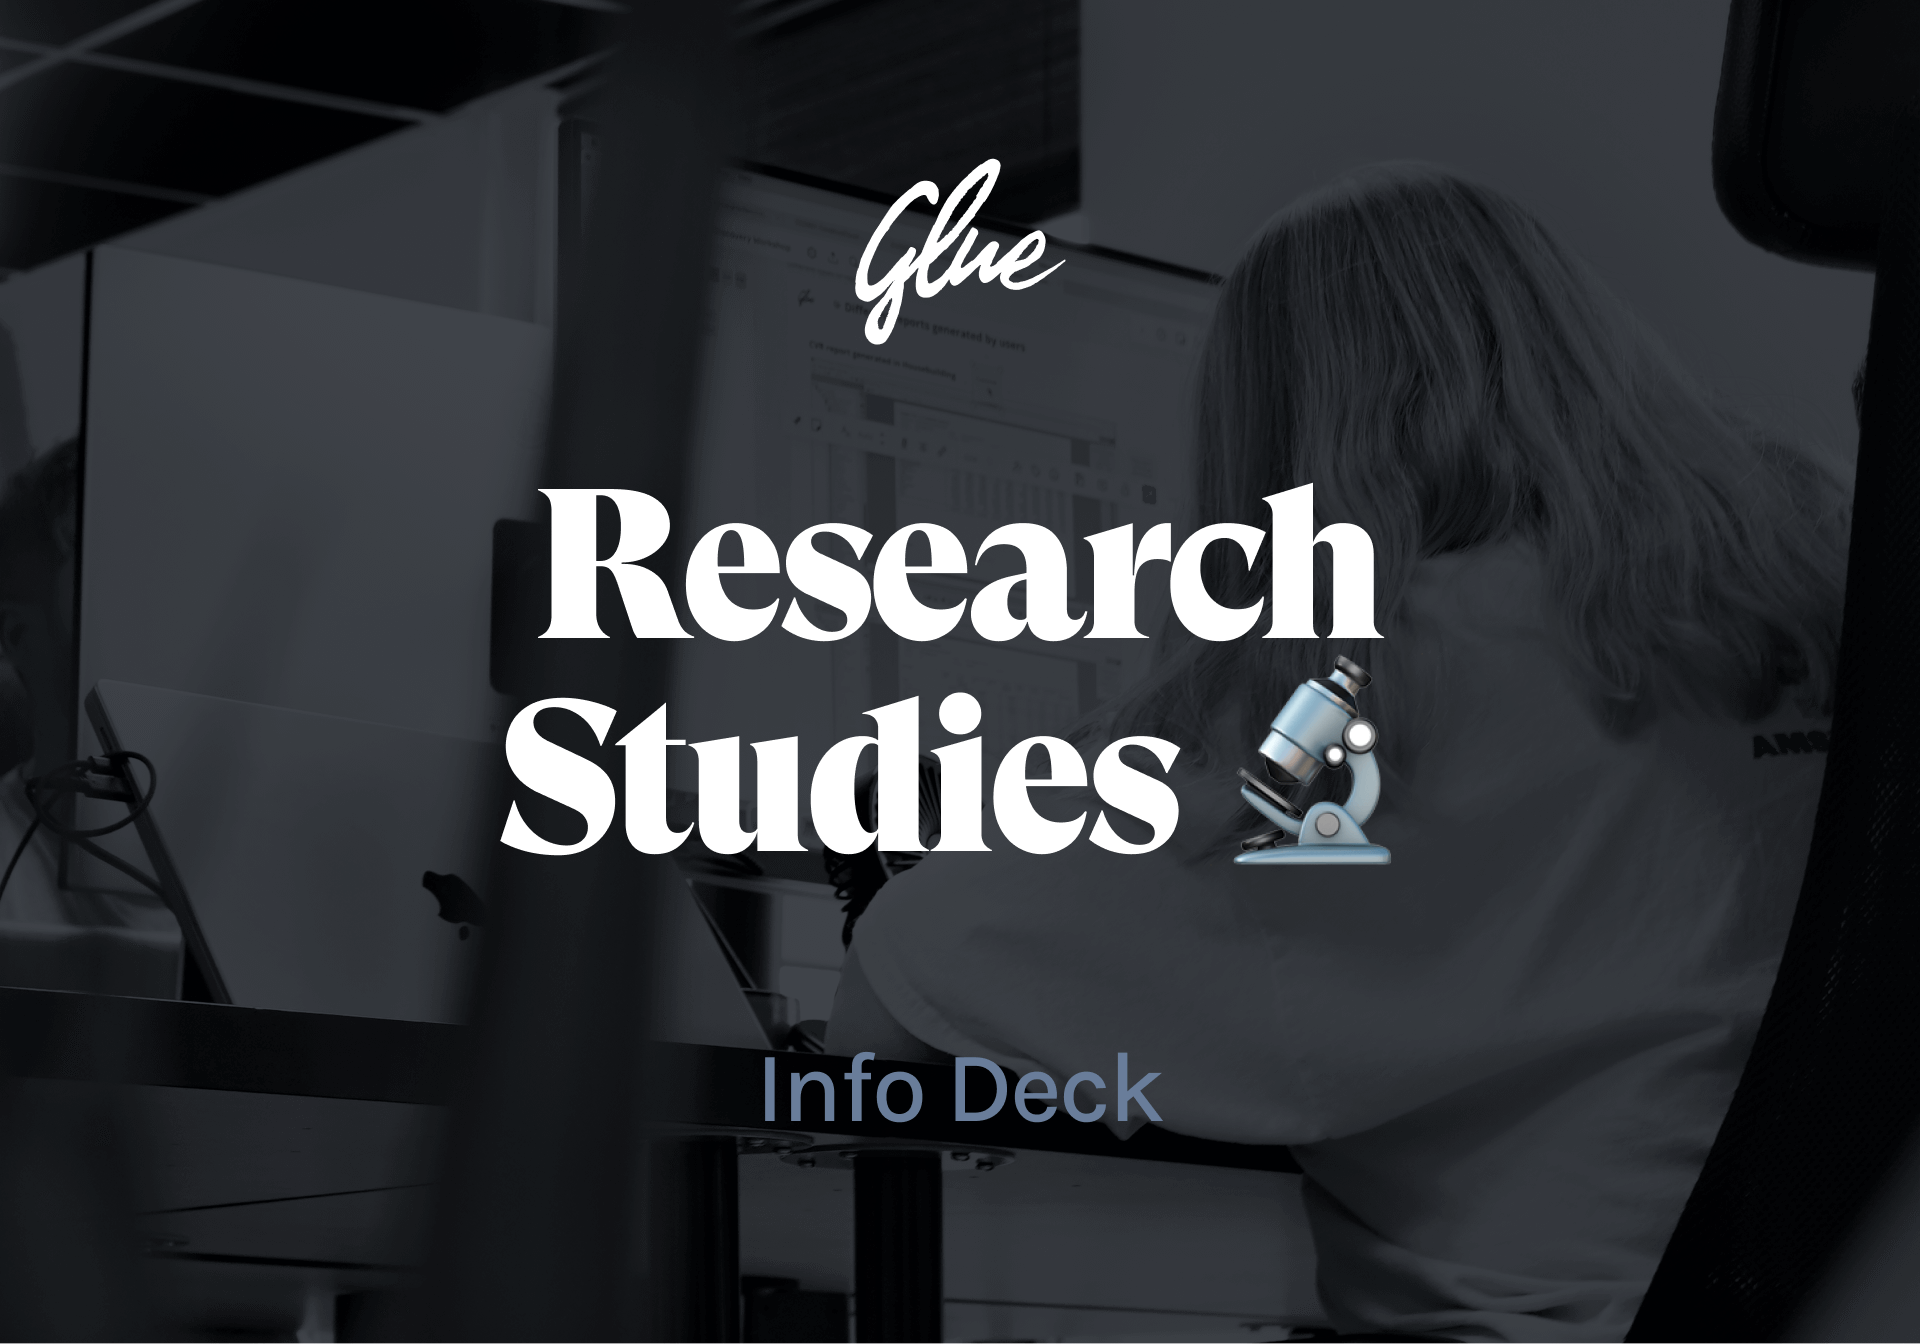 Glue Research Studies info-deck cover